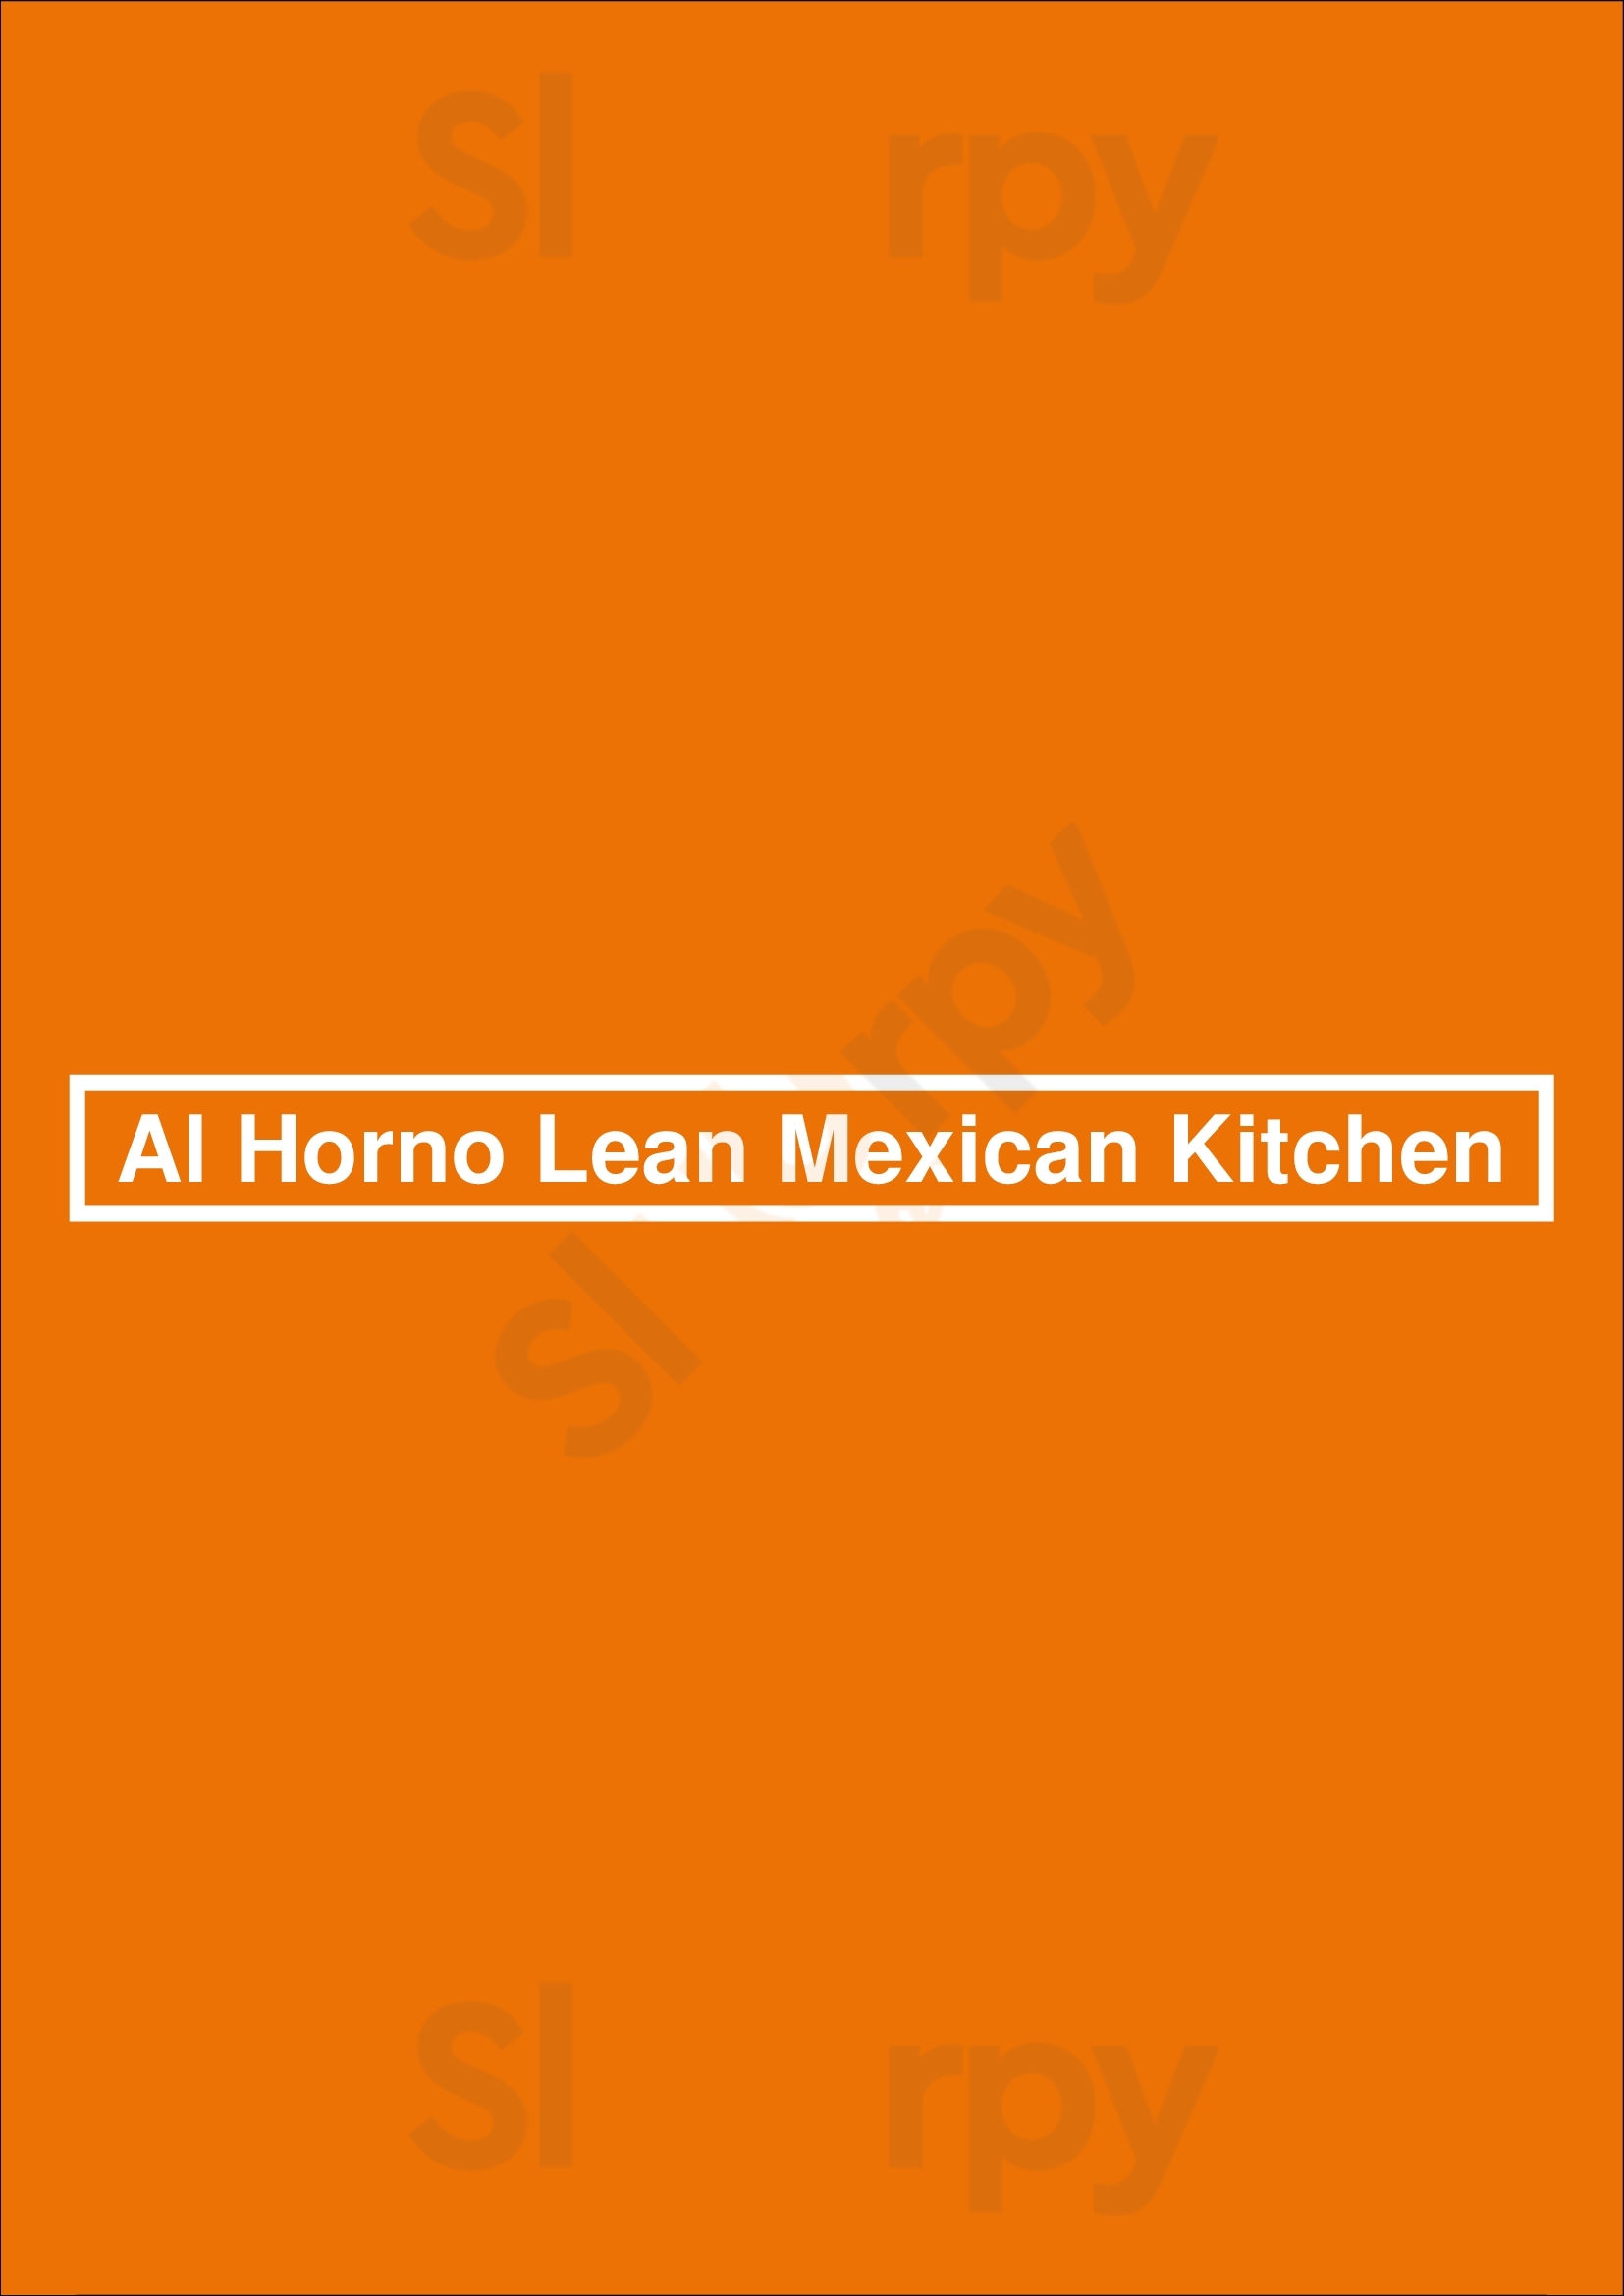 Al Horno Lean Mexican Kitchen New York City Menu - 1